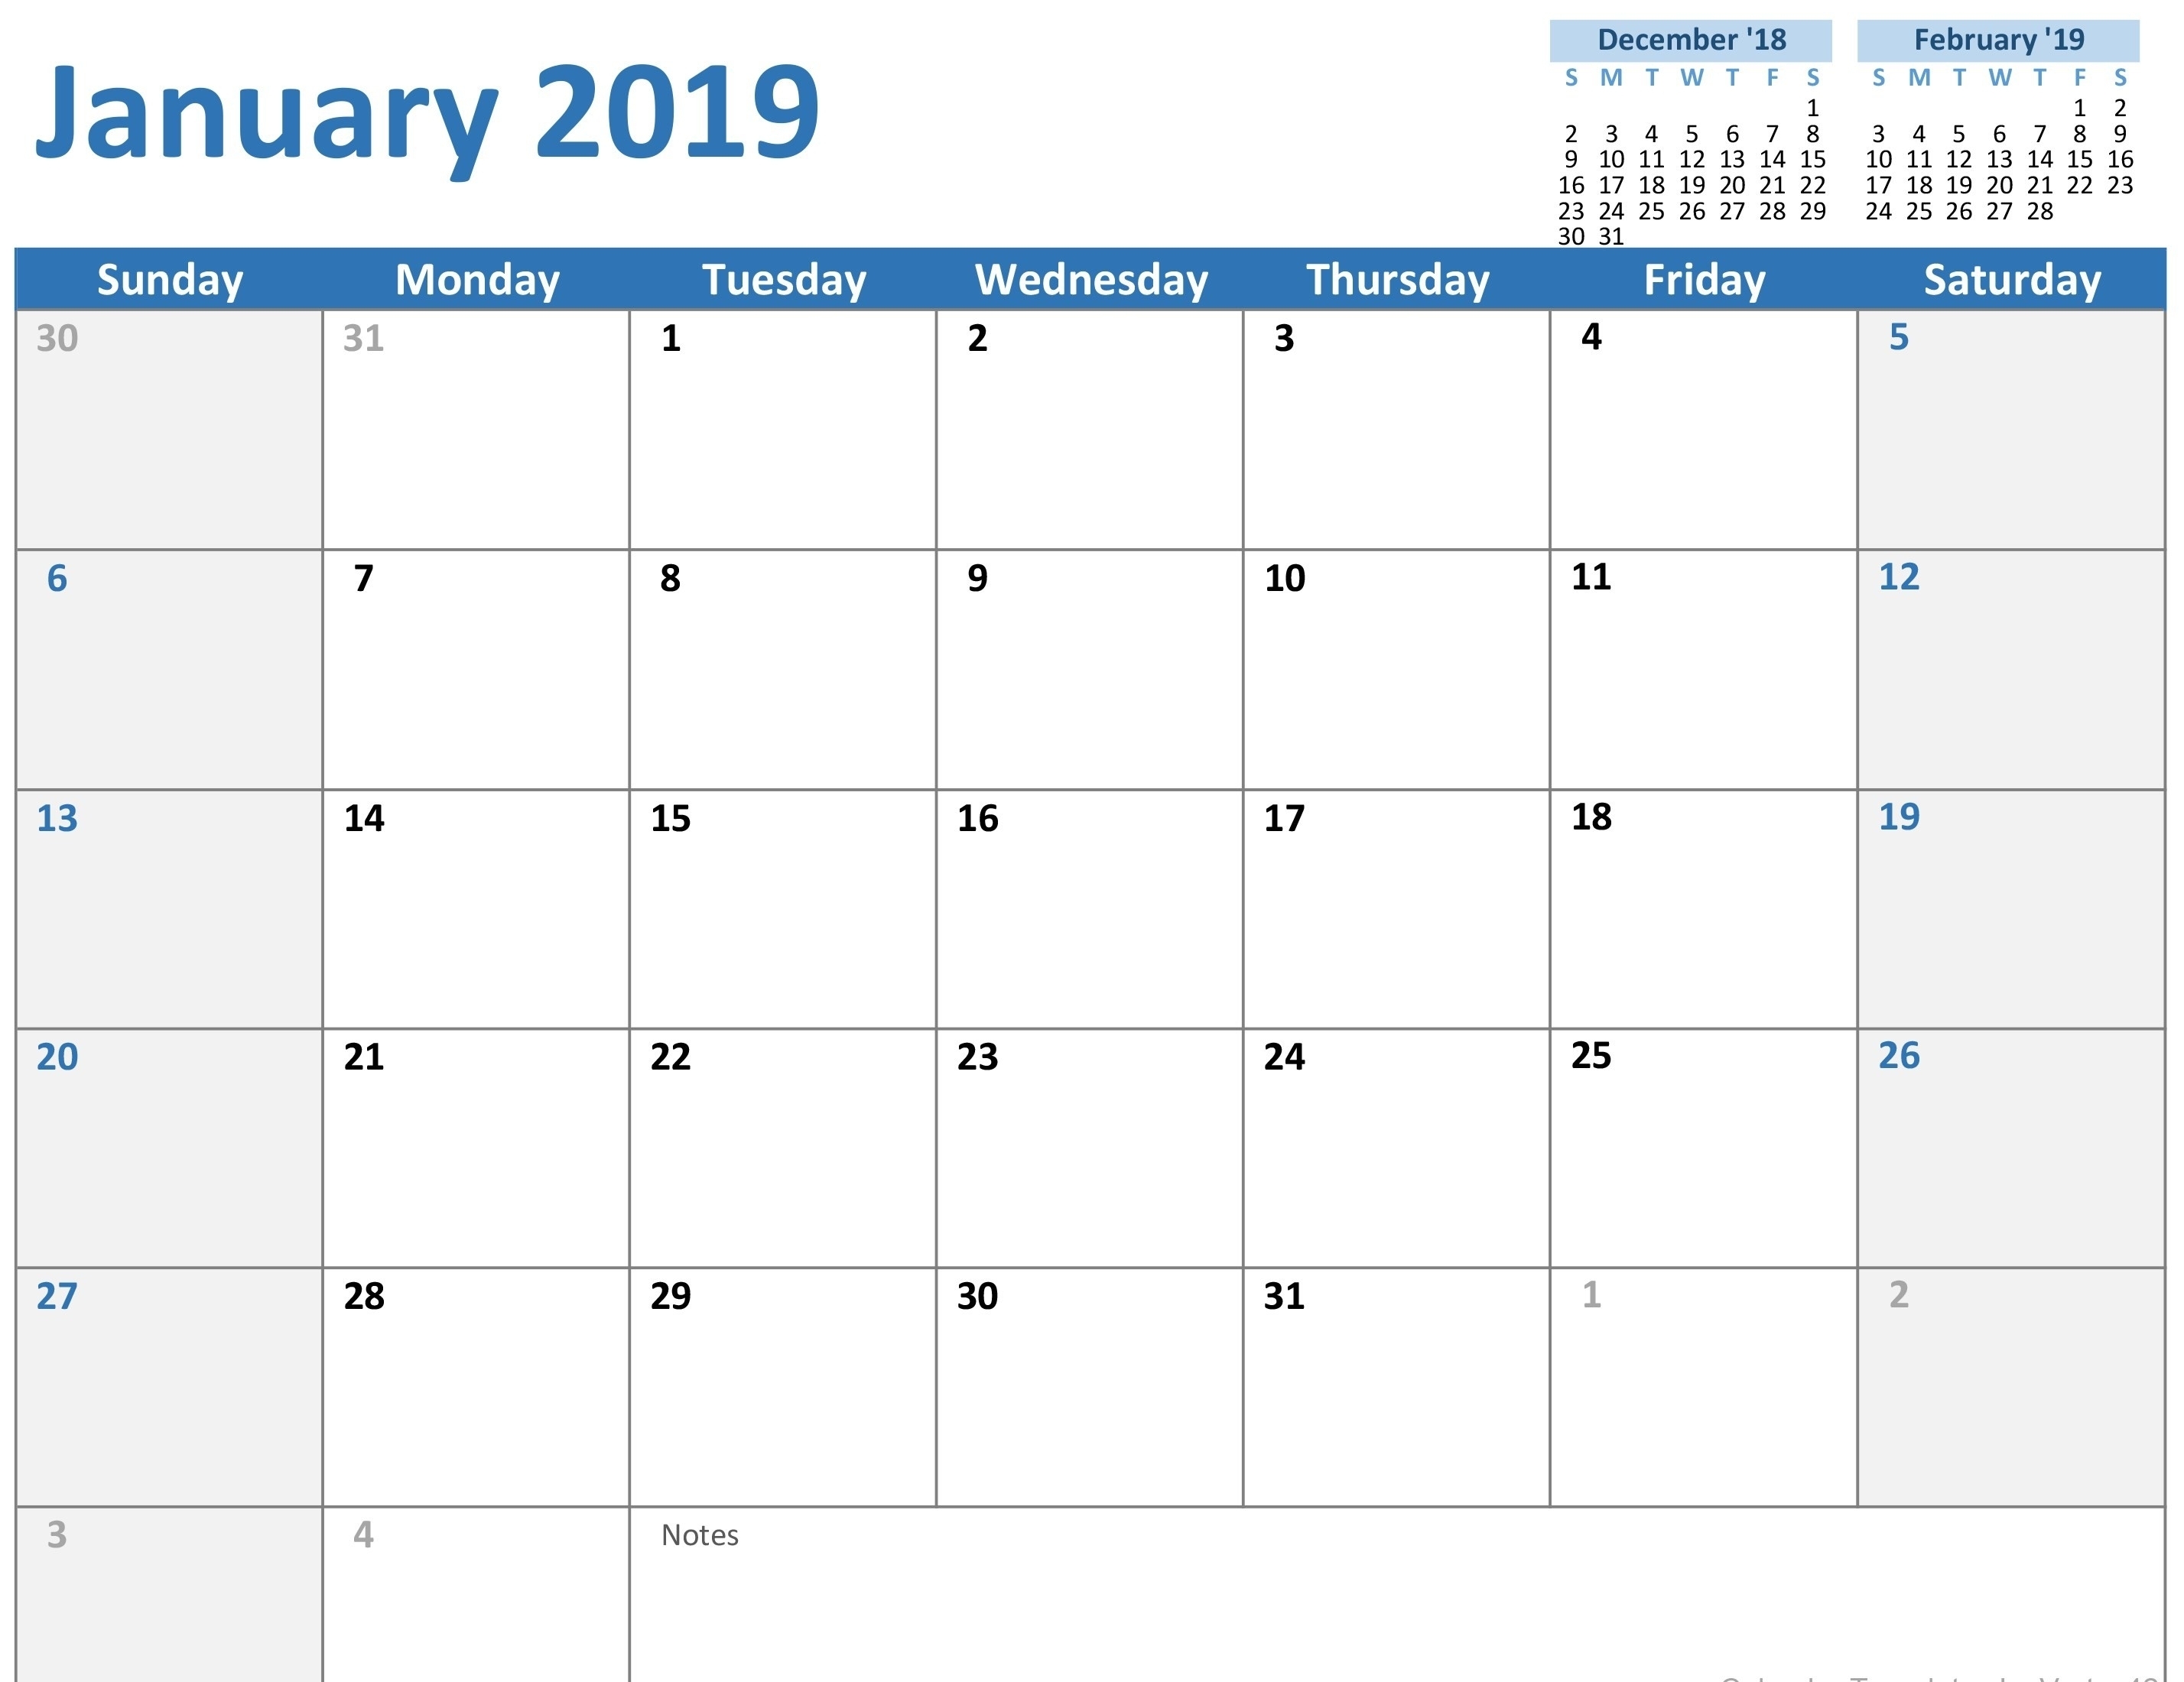 Monday Sunday Calendar Template Weekly Employee Schedule To Through for Monday - Sunday Calendar Template